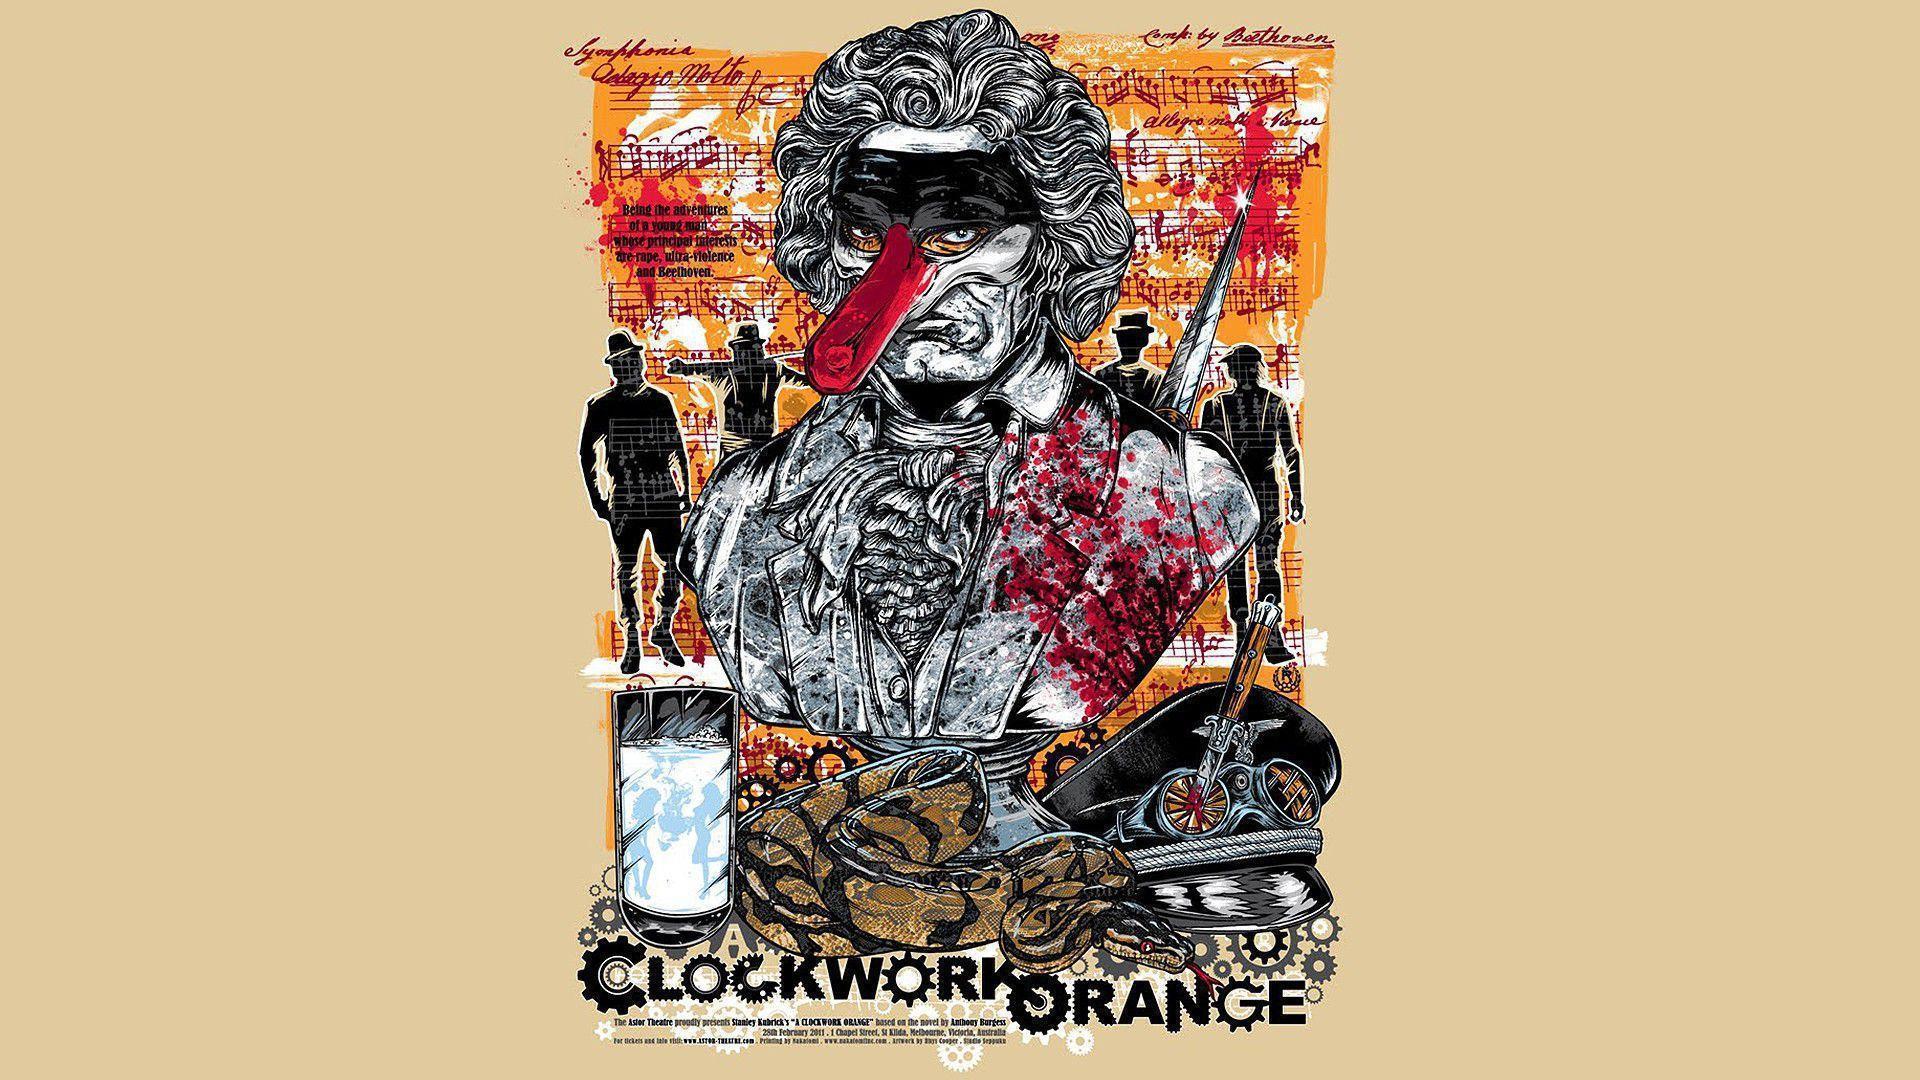 A Clockwork Orange Wallpaper Image Photo Picture Background